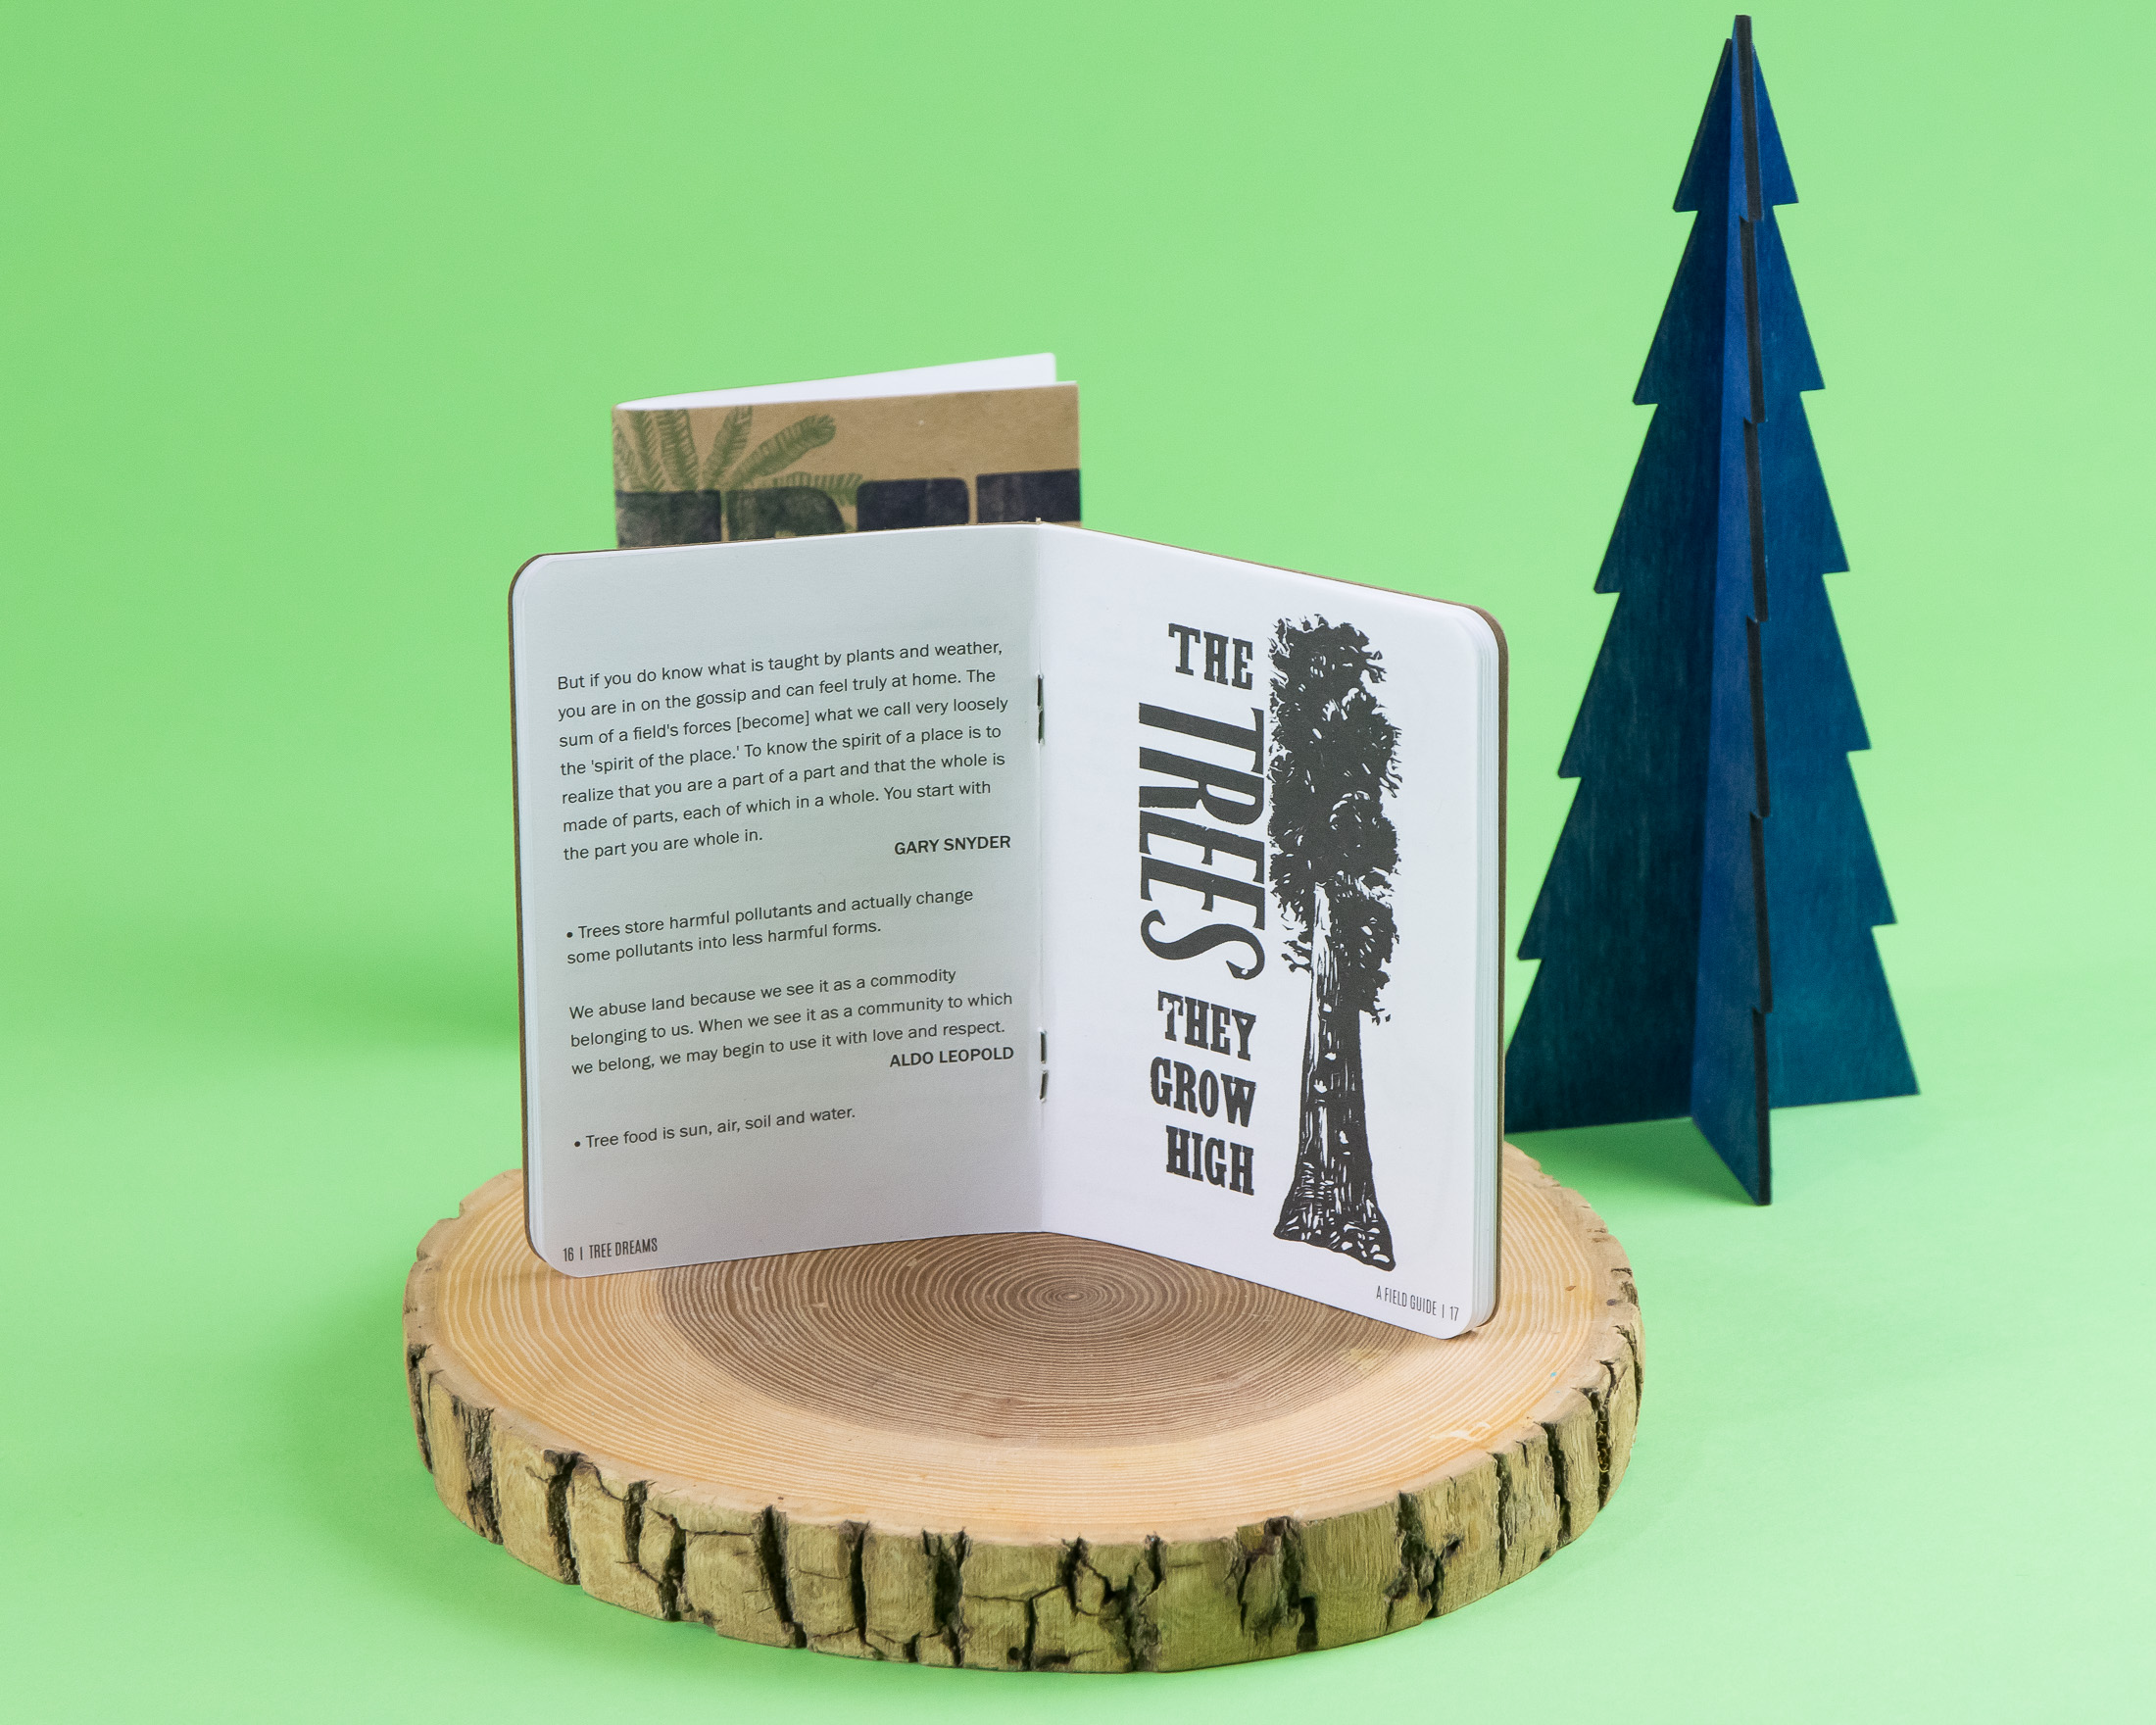 Tree Dreams Field Guide - Scout Books